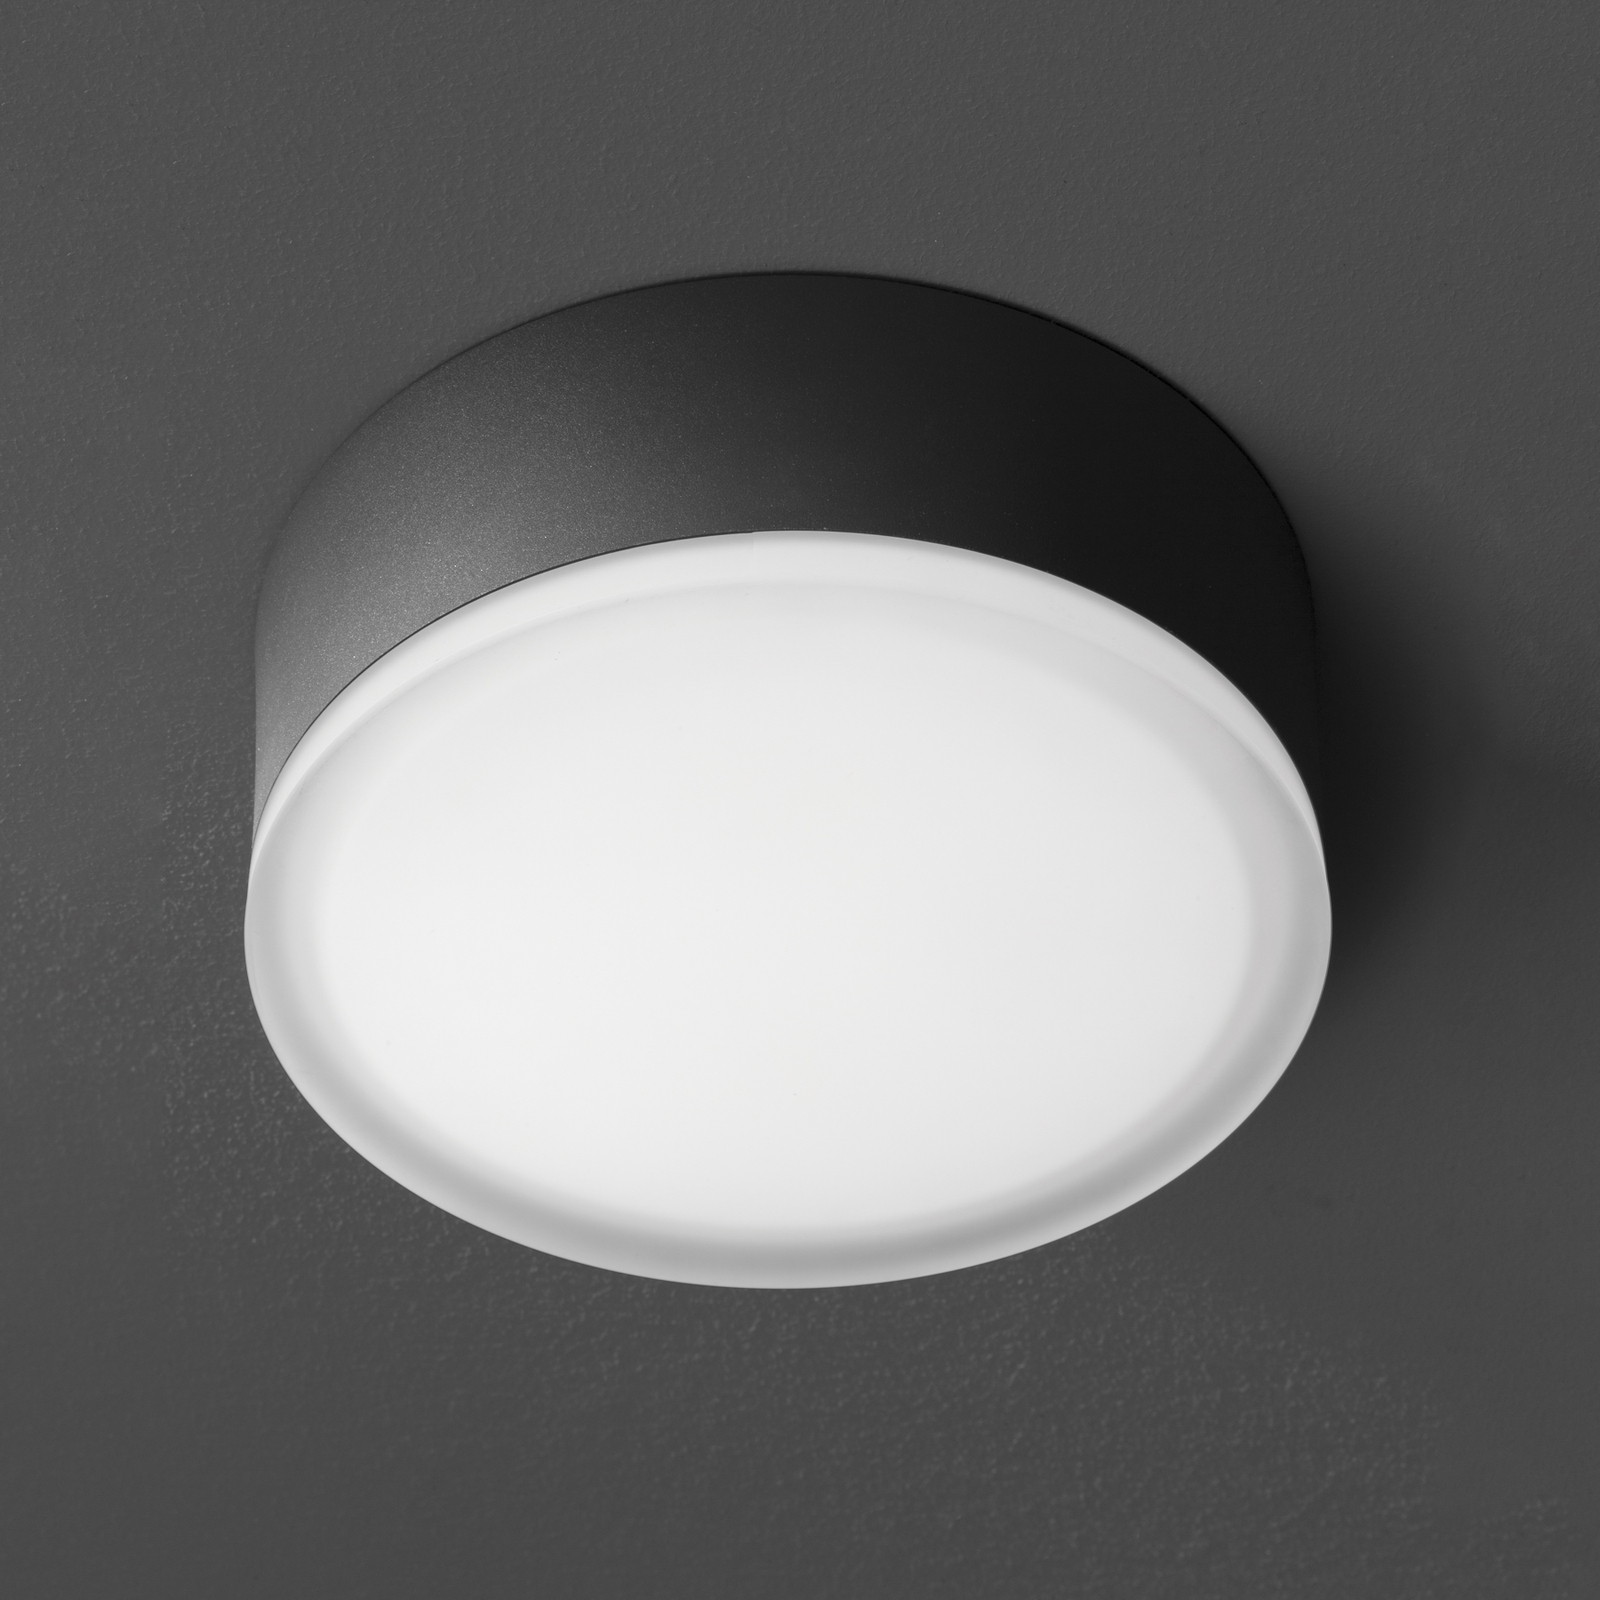 Stropné svietidlo LED 1421 pre exteriér, grafit Ø 20,5 cm